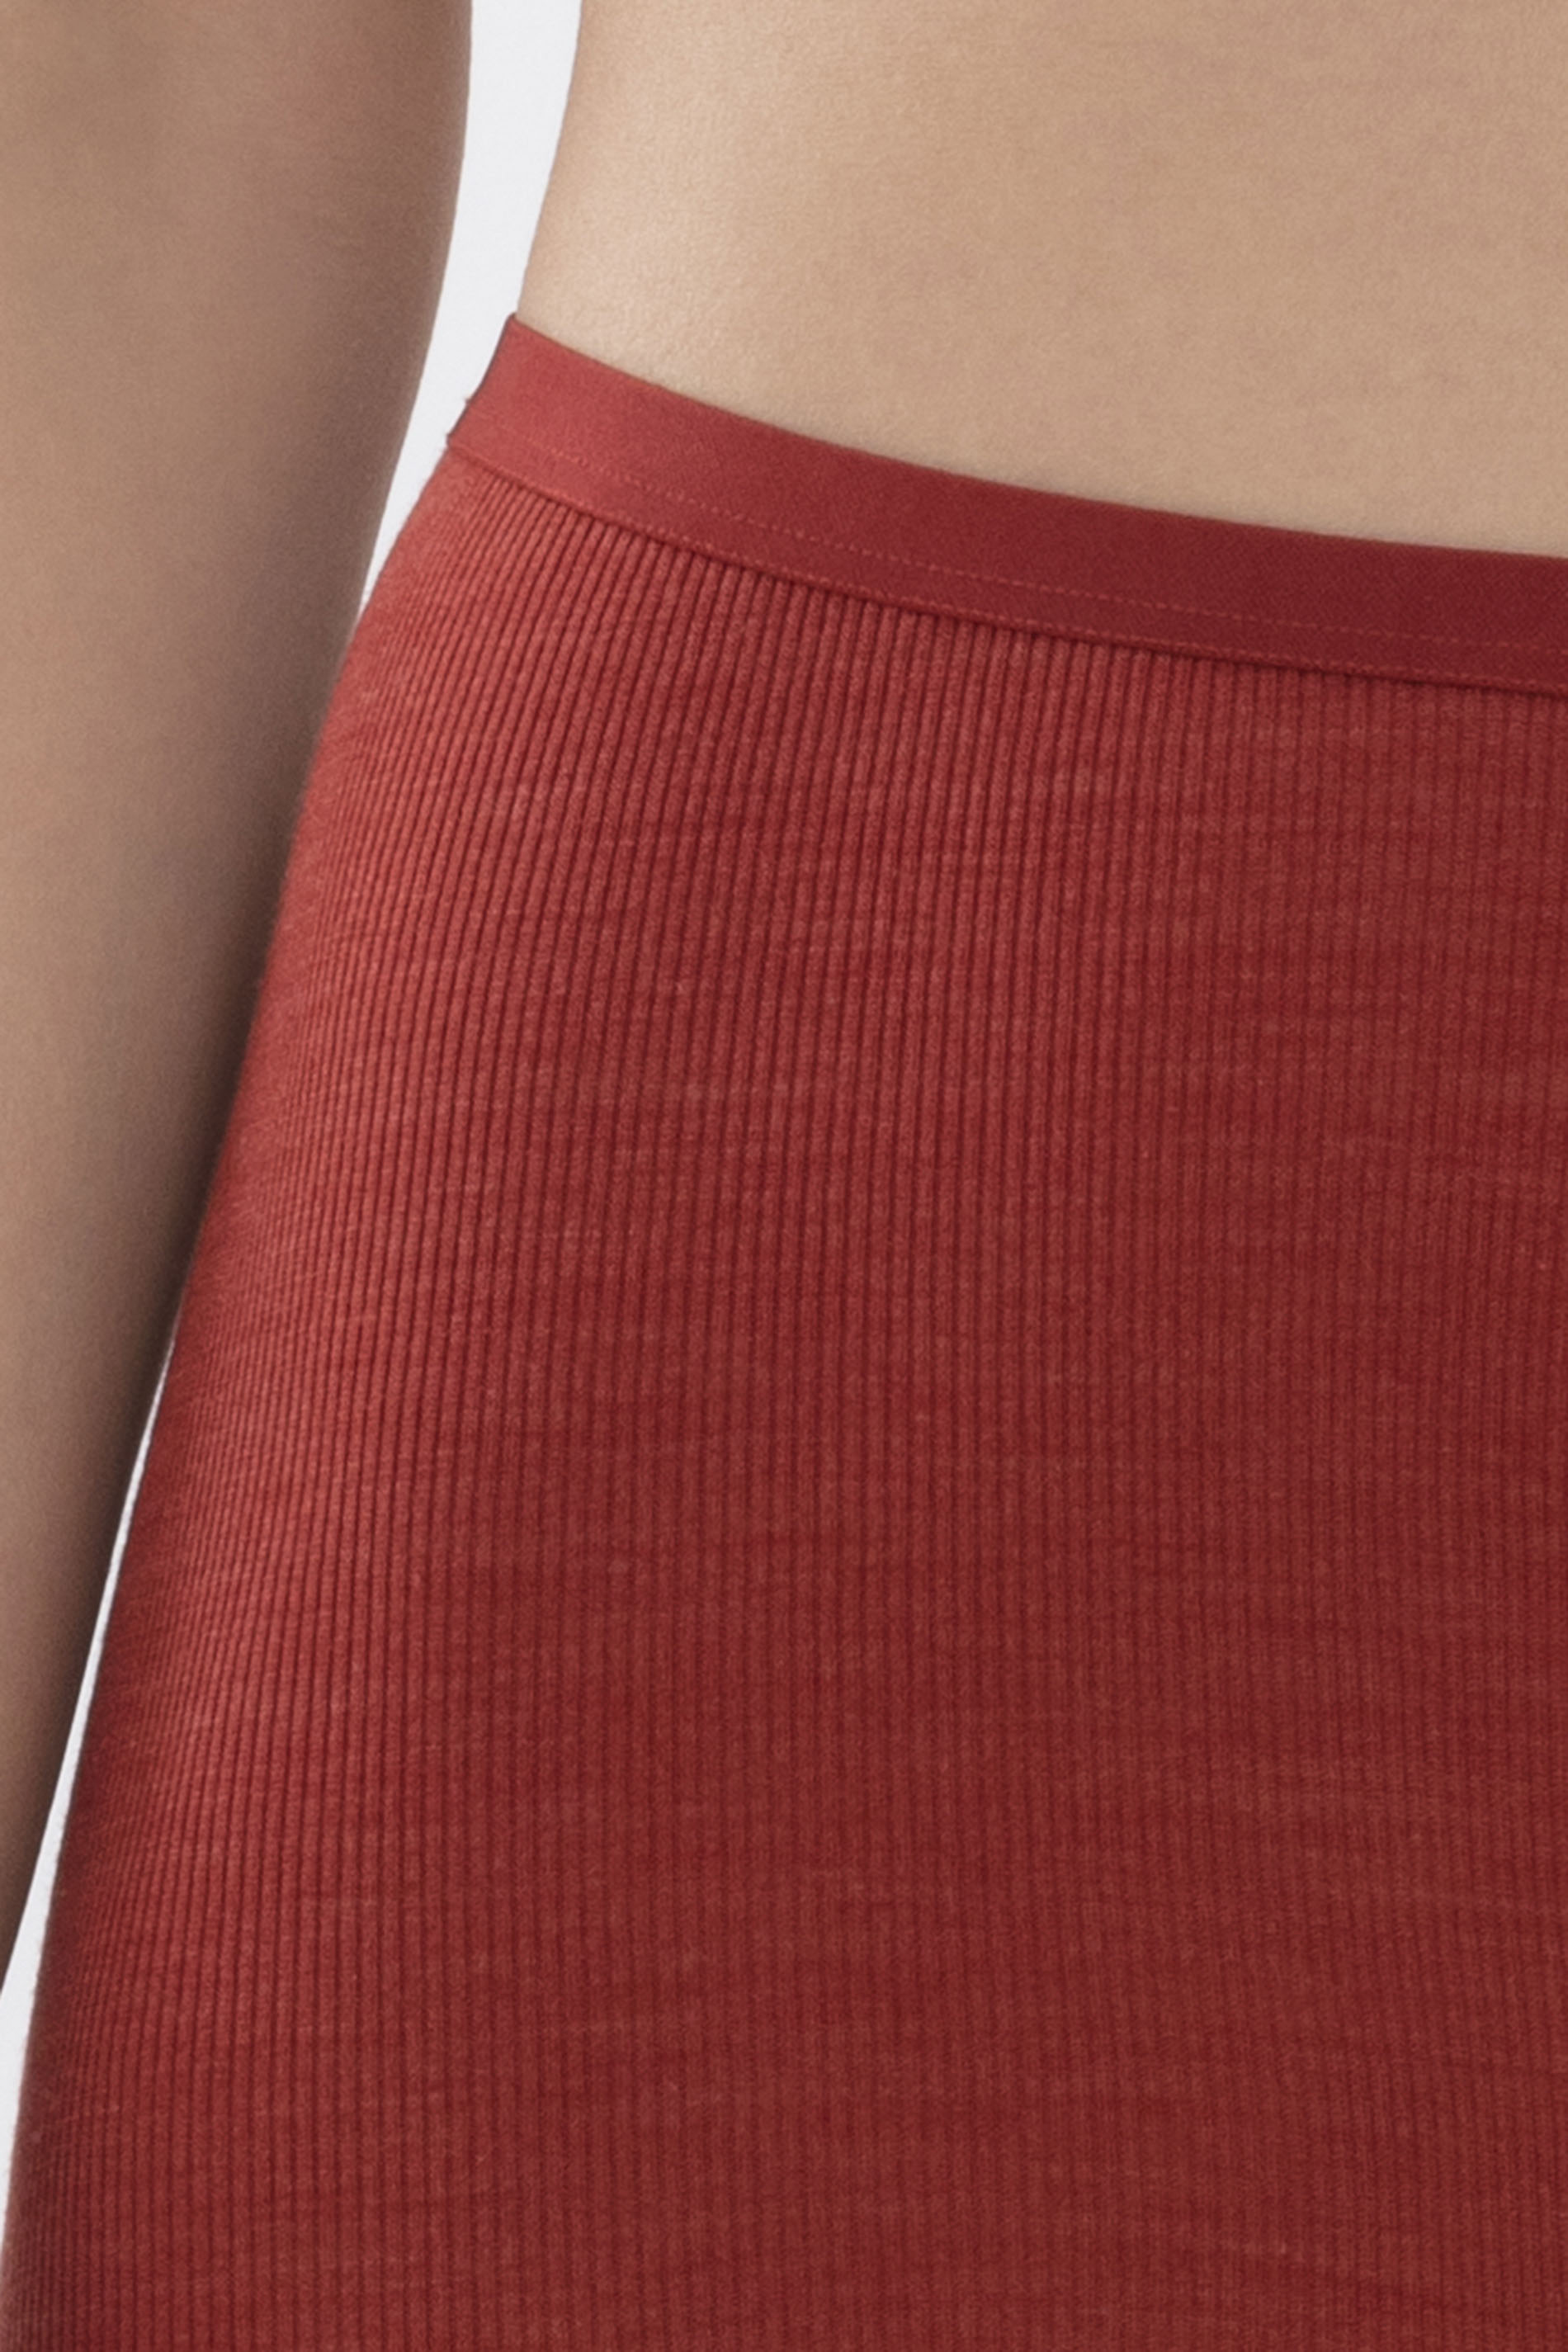 Legging Red Pepper Serie Silk Rib Wool Detailweergave 01 | mey®